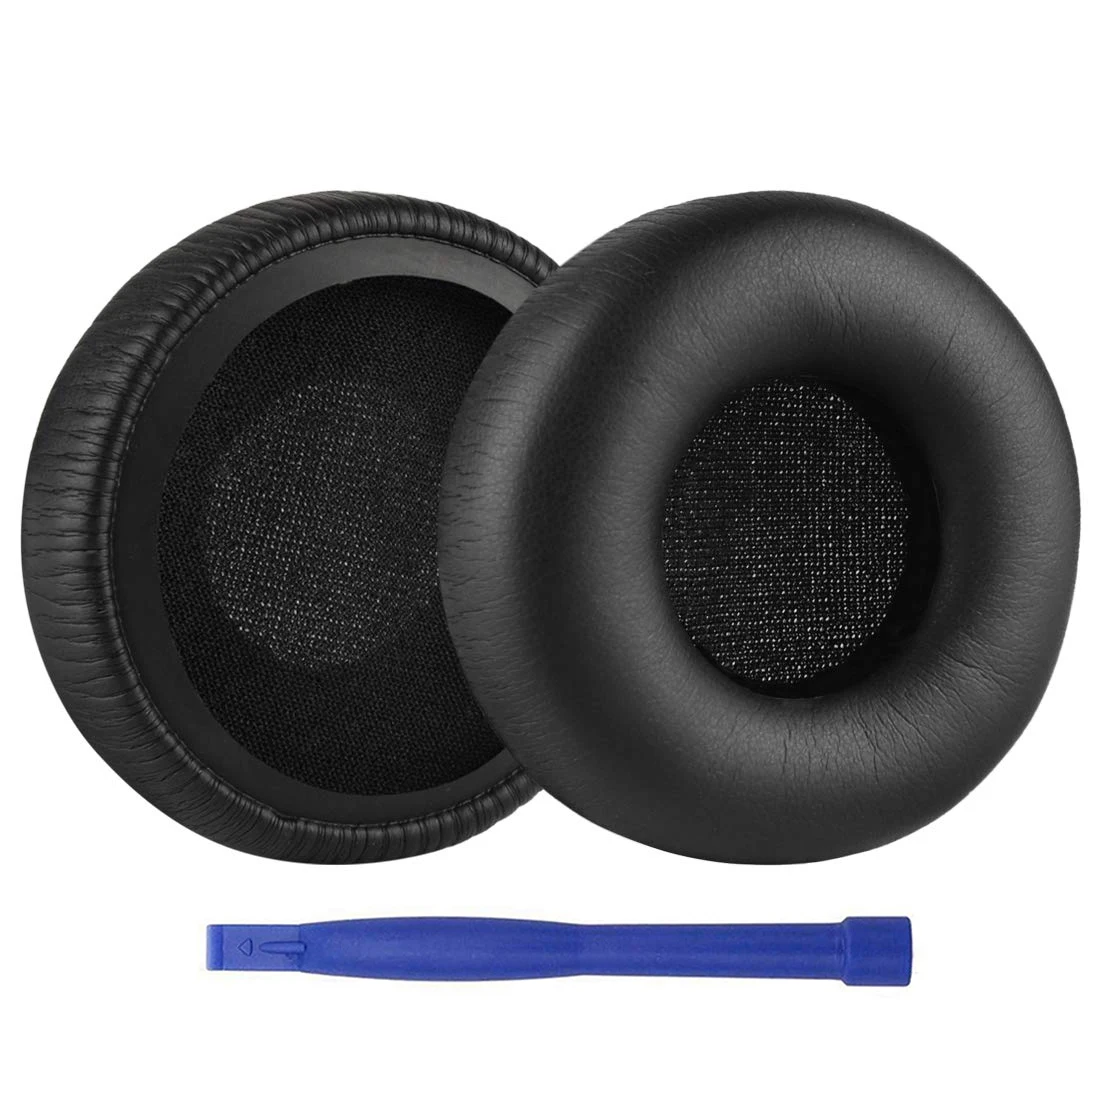 

Replacement Ear Pads Earpads Earmuffs Cushion Cup Cover Headband for AKG K430 K420 K450 K480 Q460 Headphones